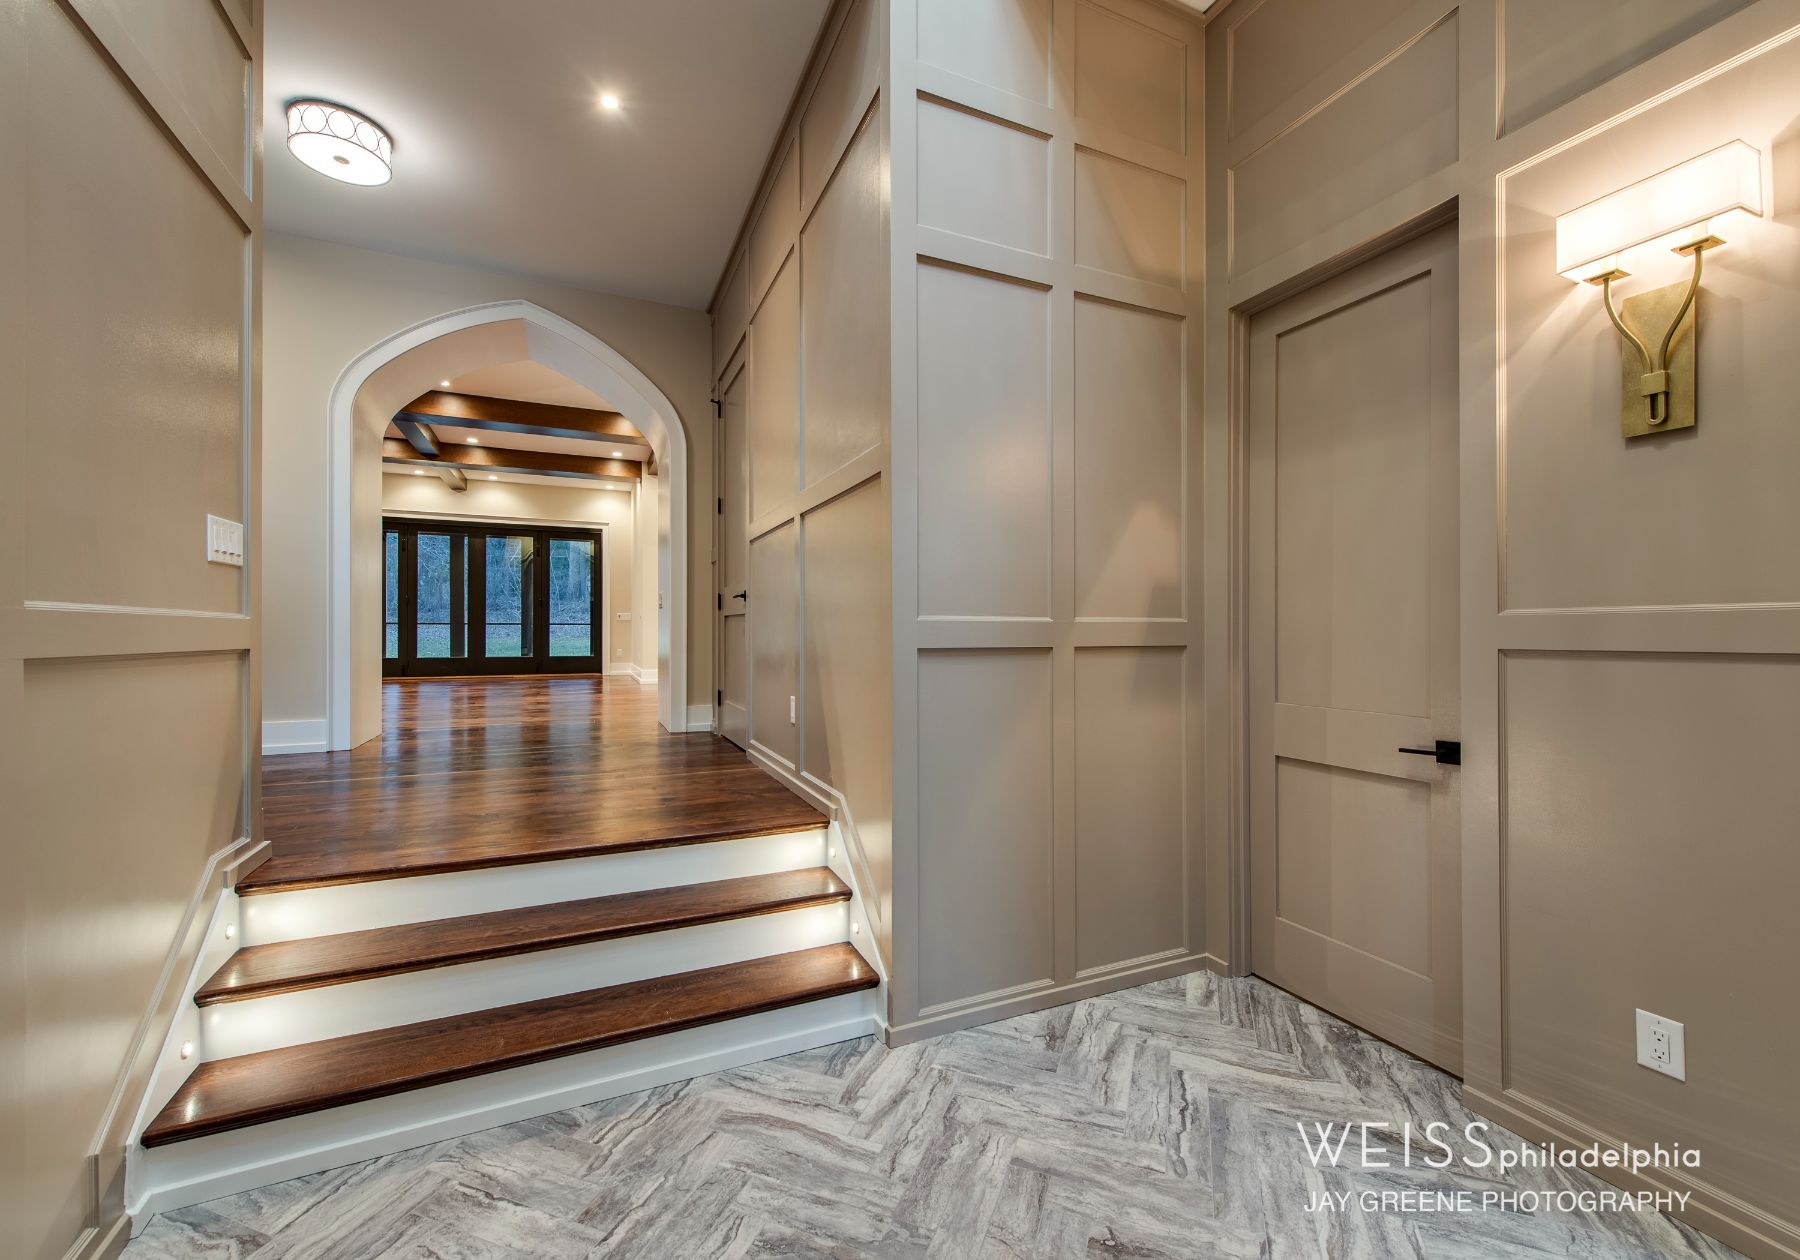 best custom homes wayne pa - design home studios - monochrome tan walls and doors - curved archways - hallway